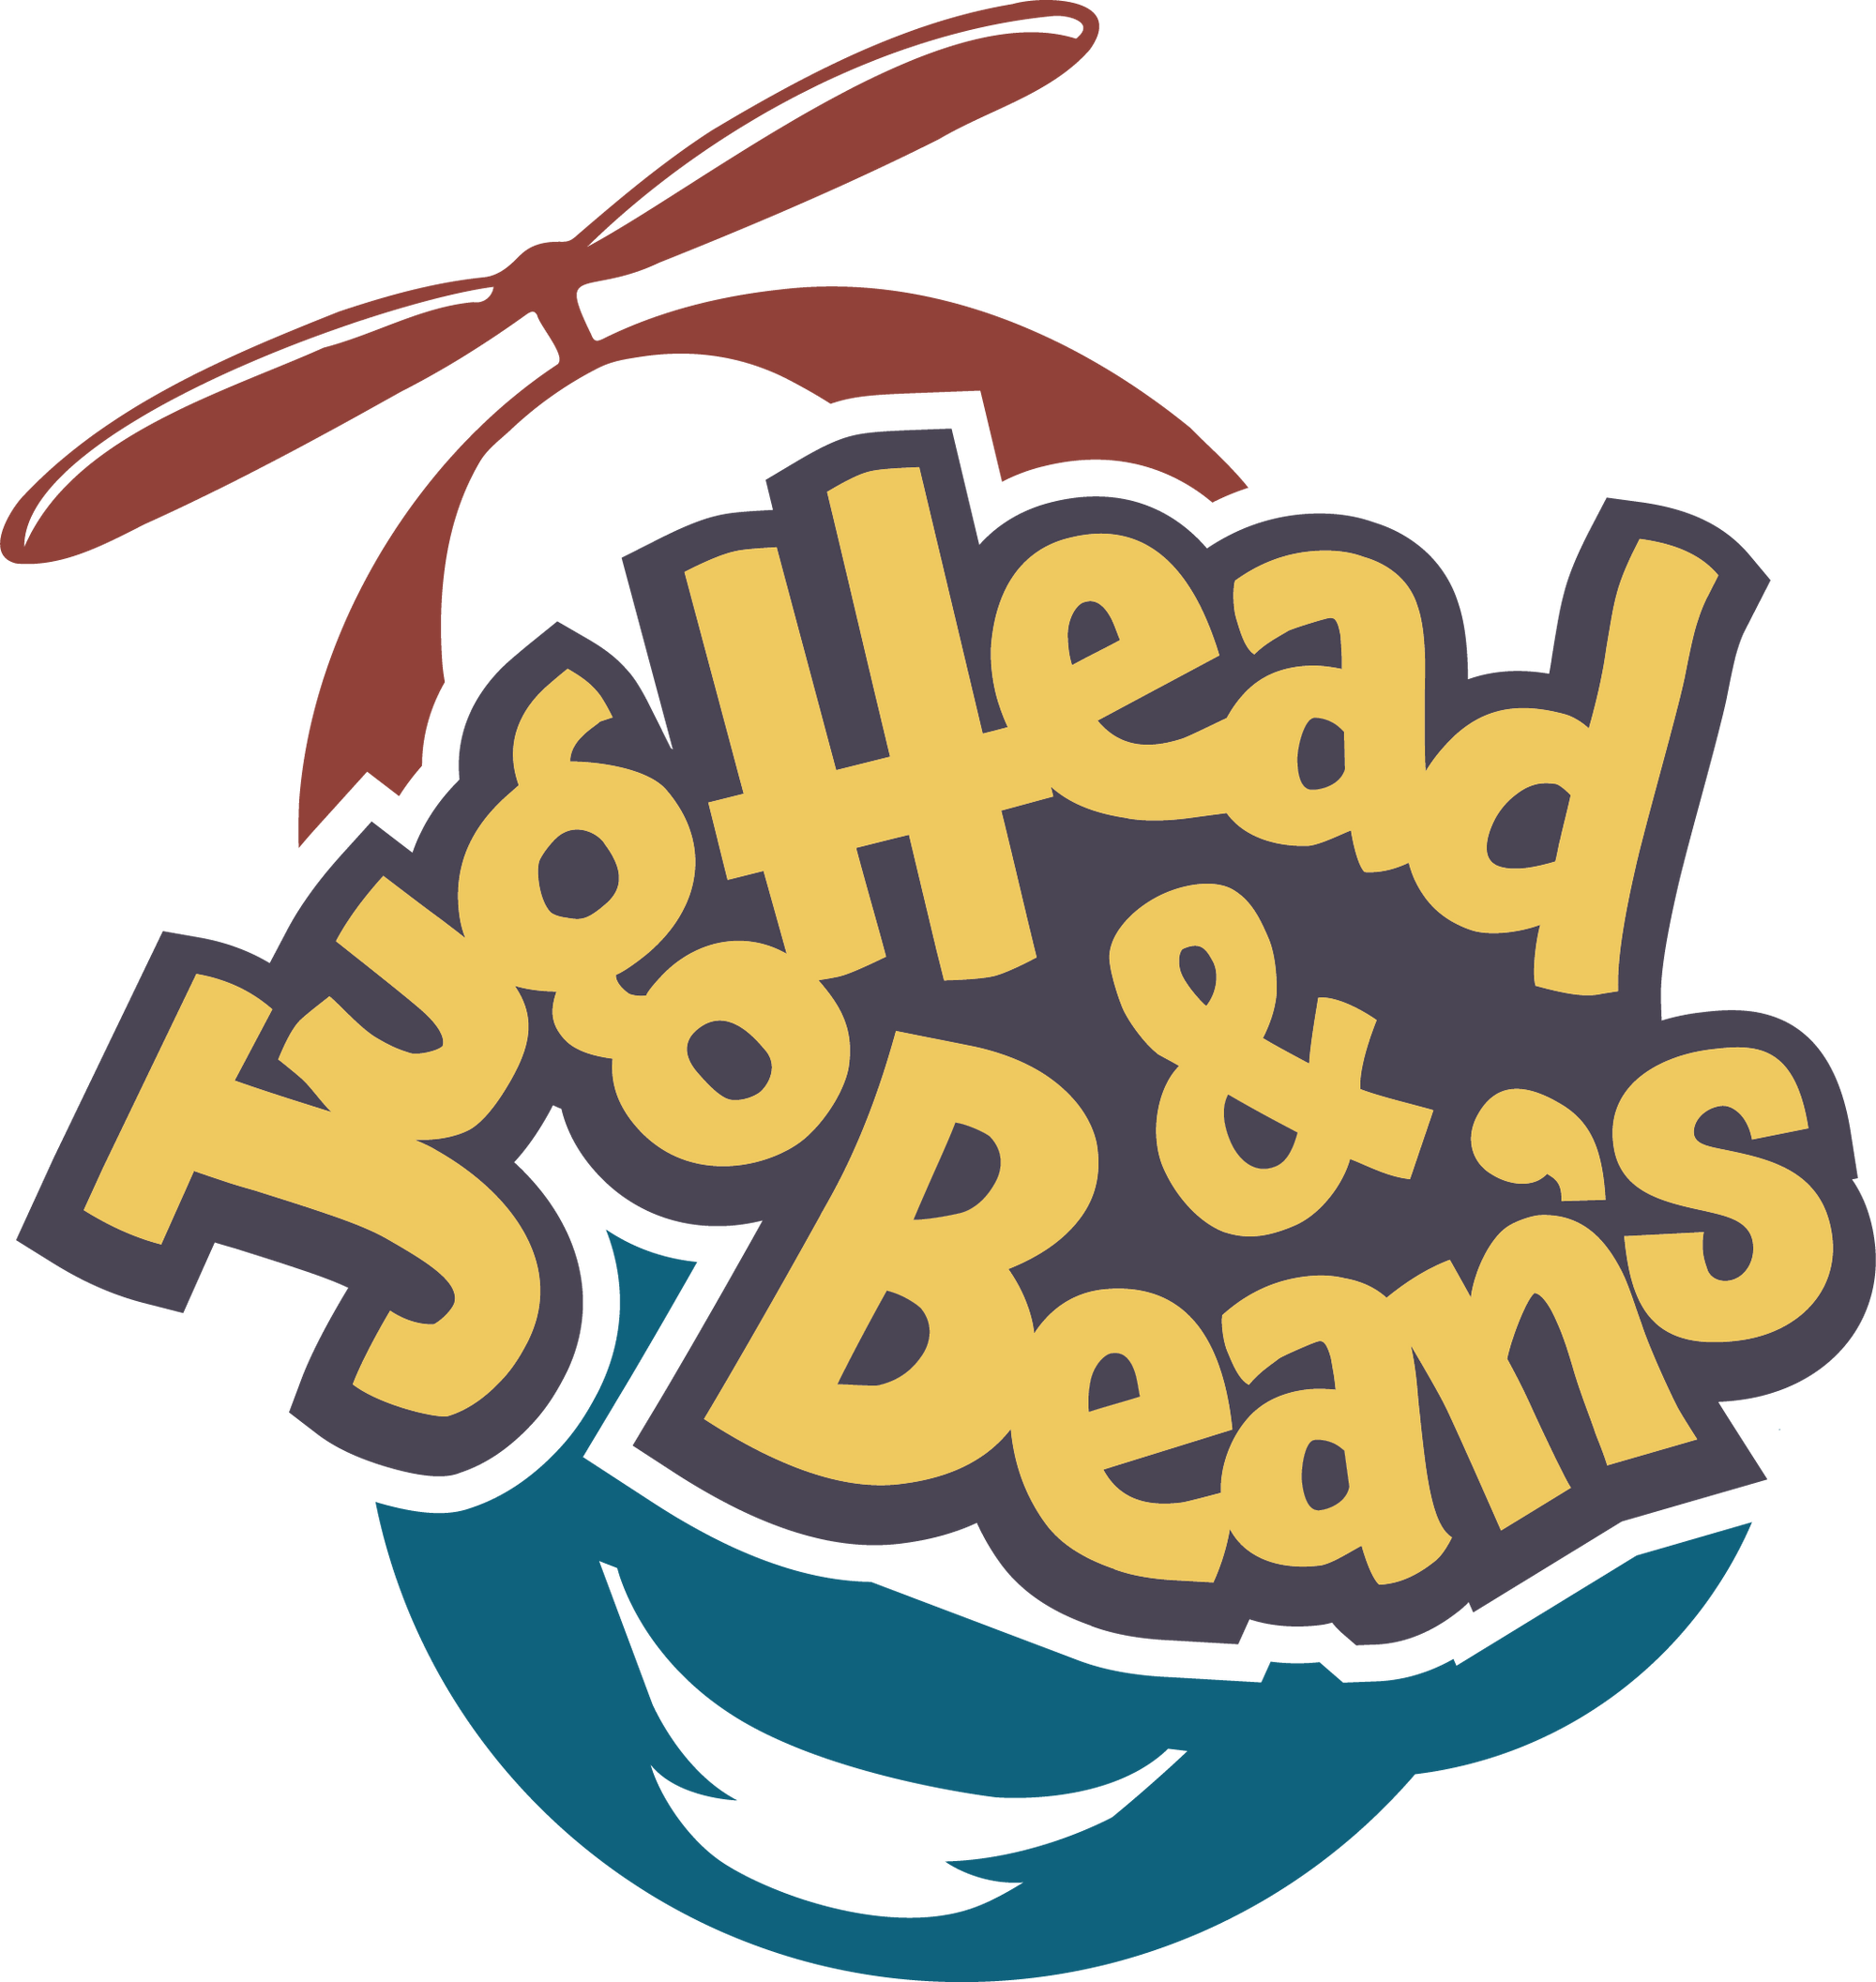 Mr. Bean | Mr bean, Tv show logos, Video tools